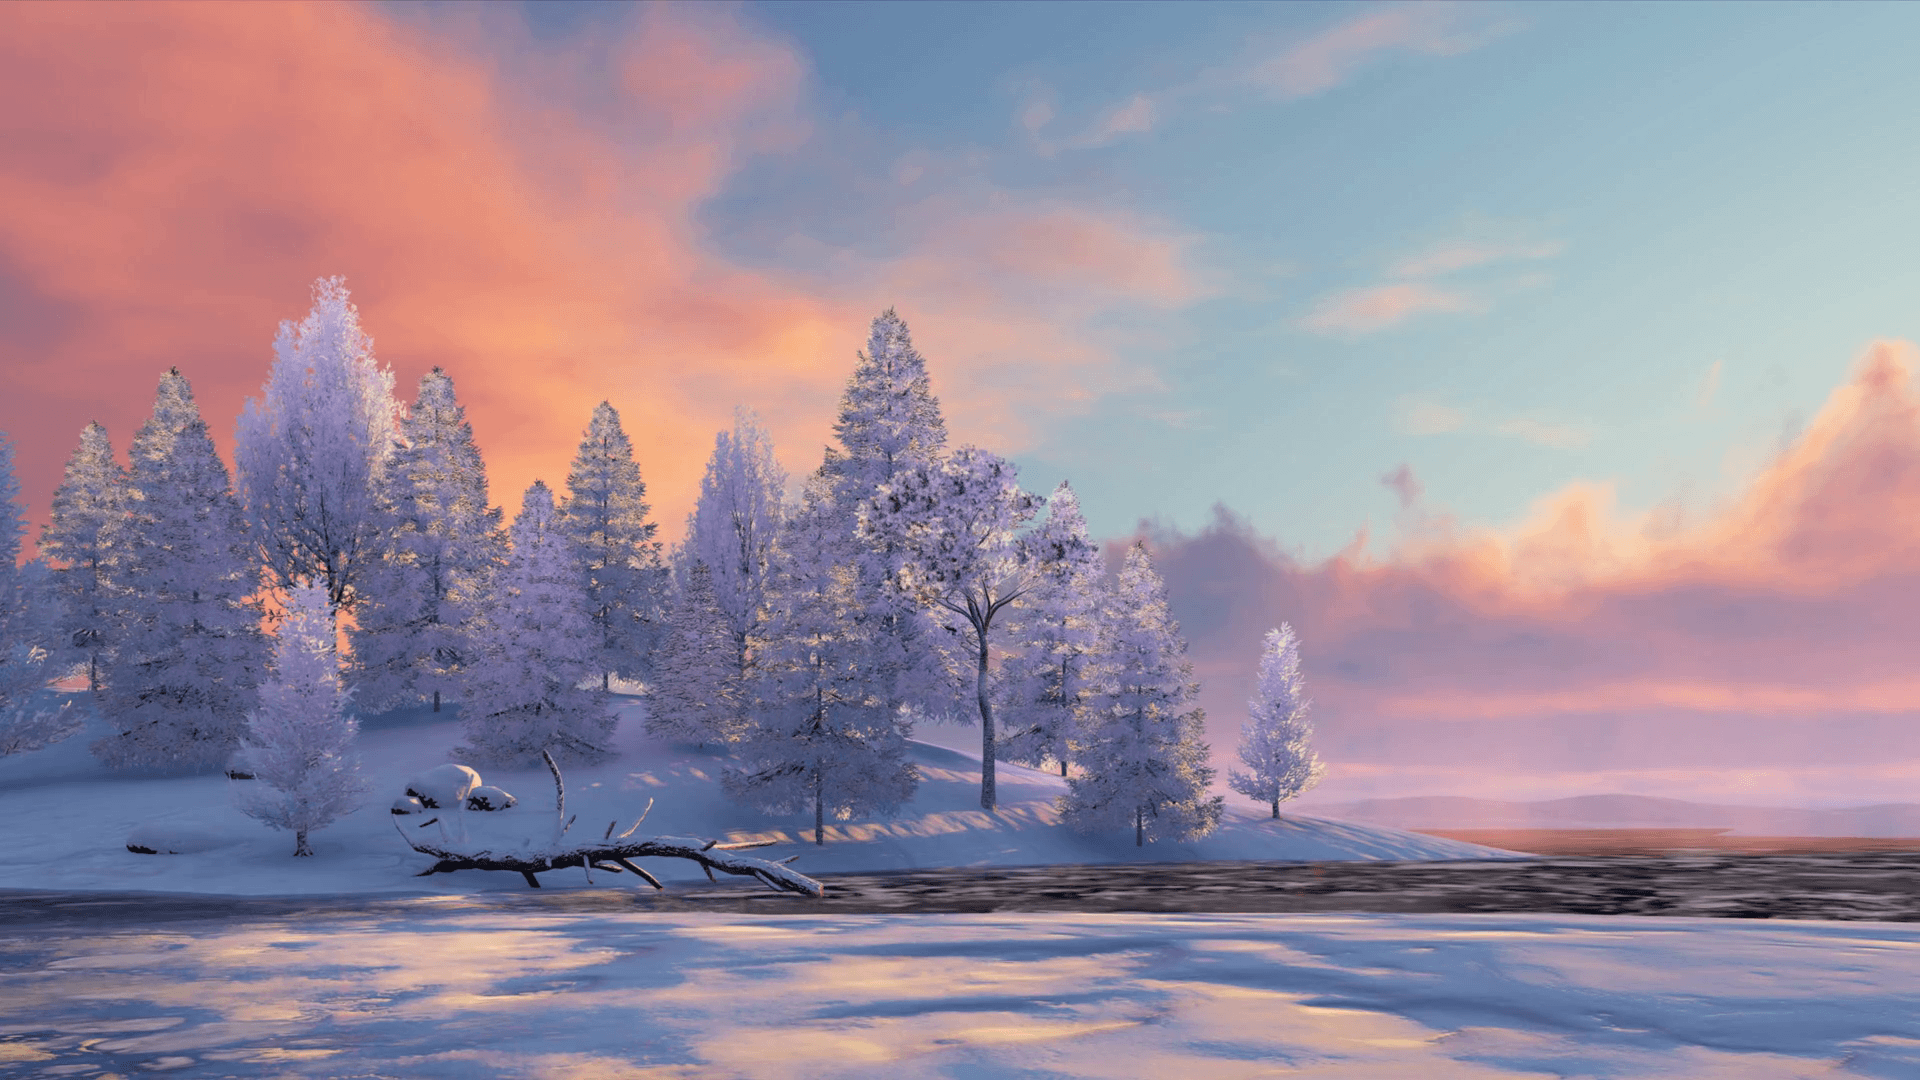 Peaceful Winter Scenes Wallpapers